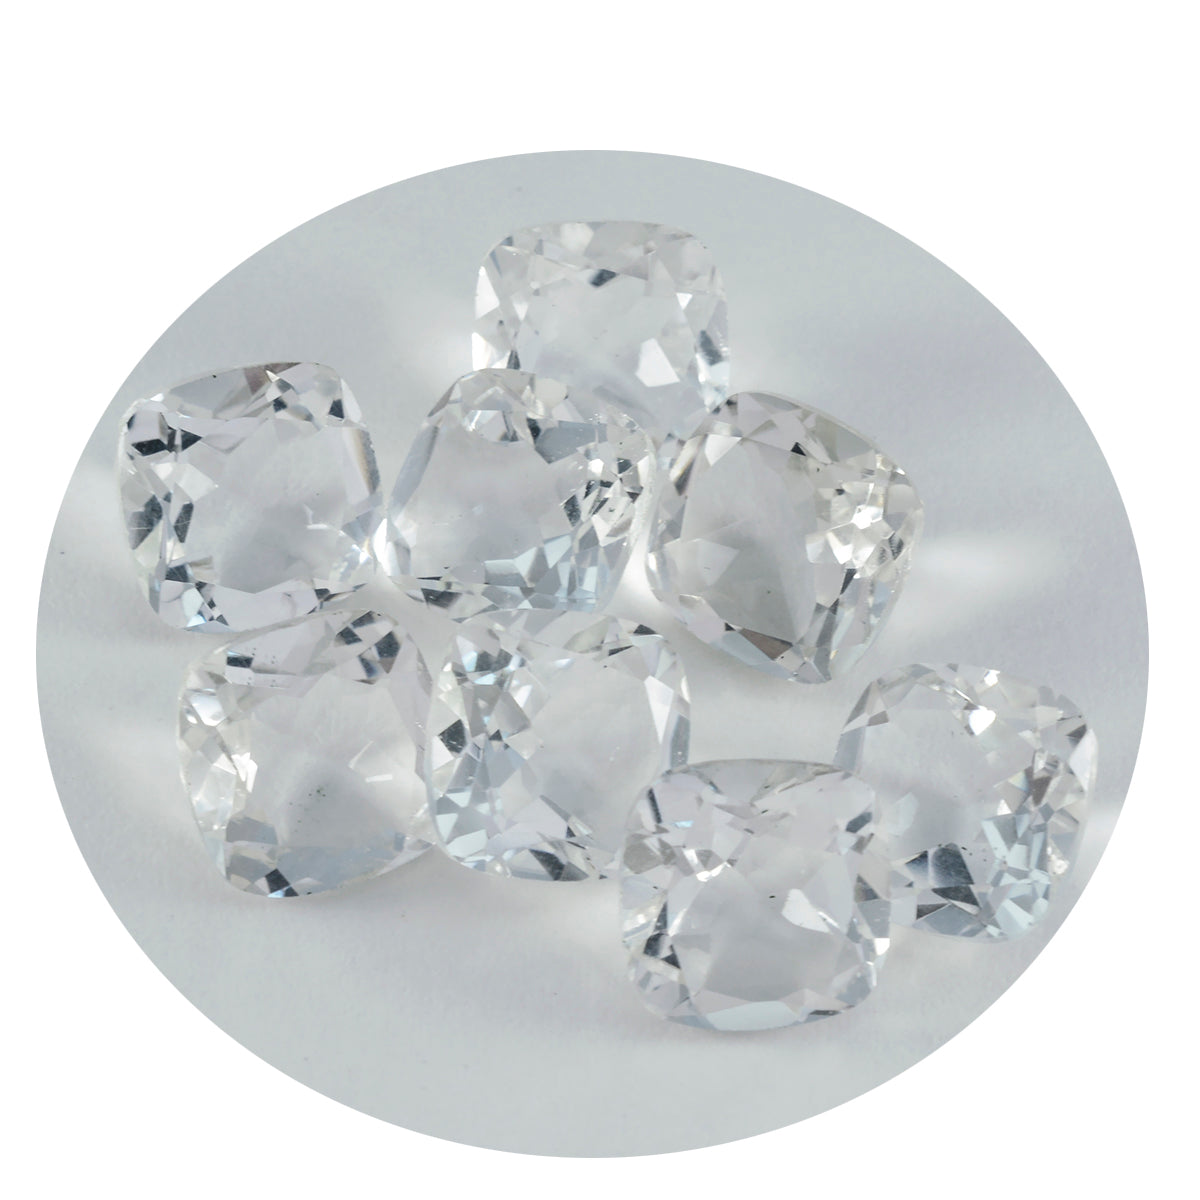 Riyogems 1PC White Crystal Quartz Faceted 8x8 mm Cushion Shape handsome Quality Loose Gem